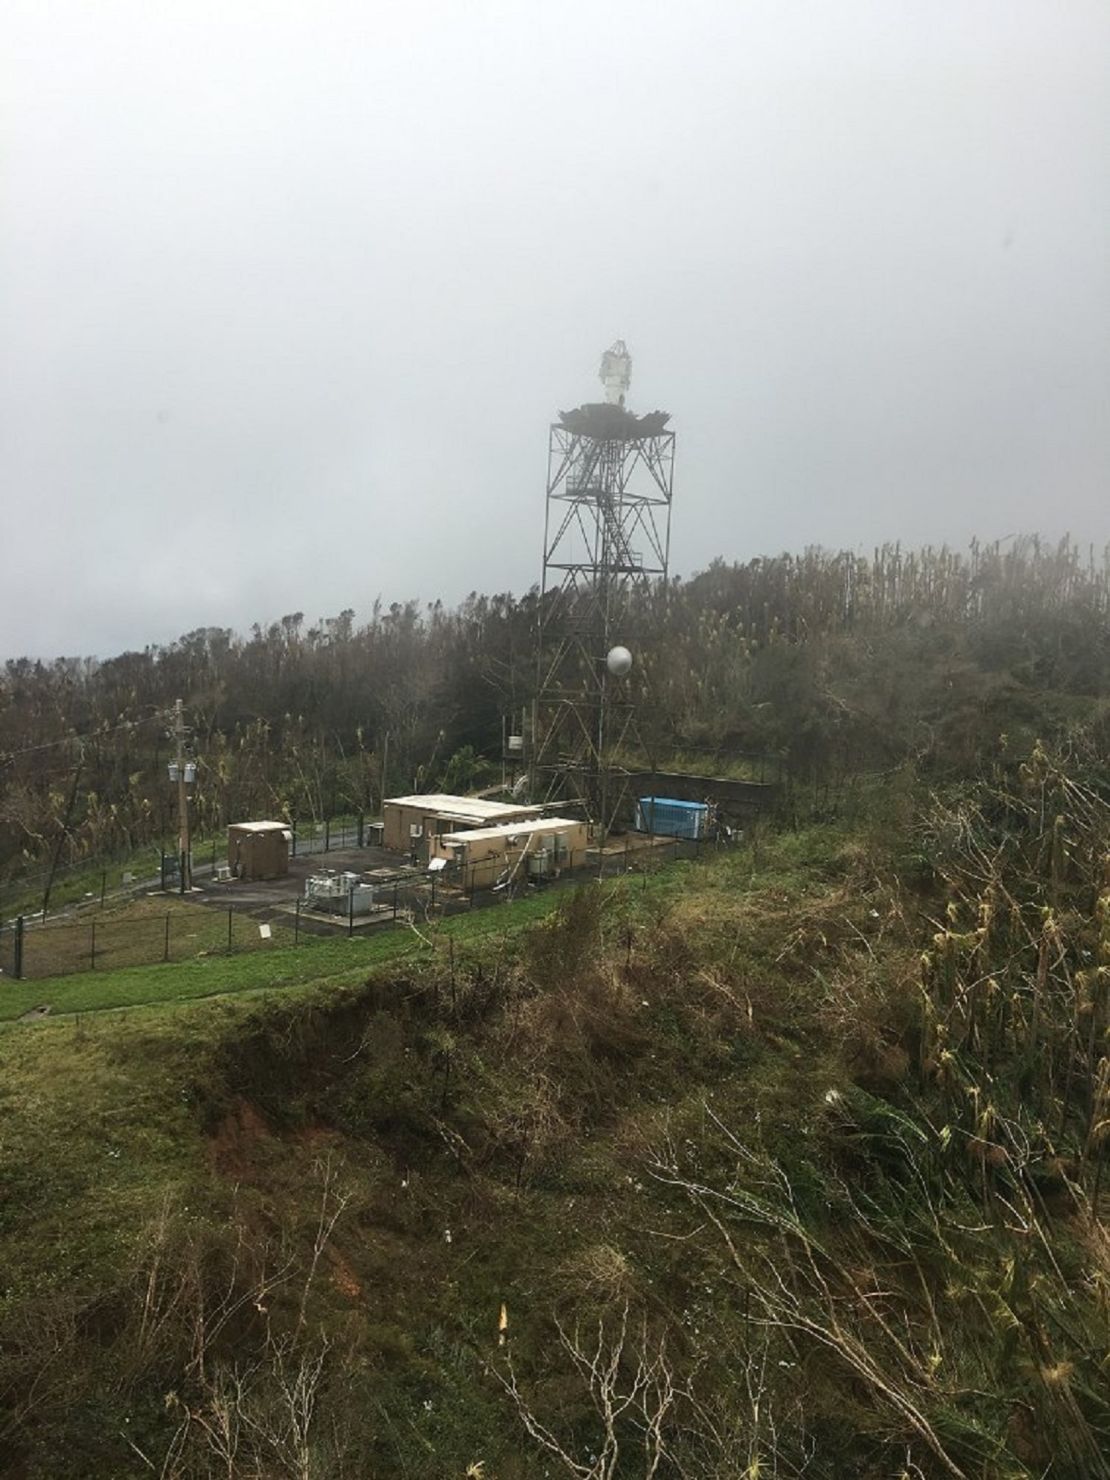 Damaged radar in Puerto Rico from Hurricane Maria